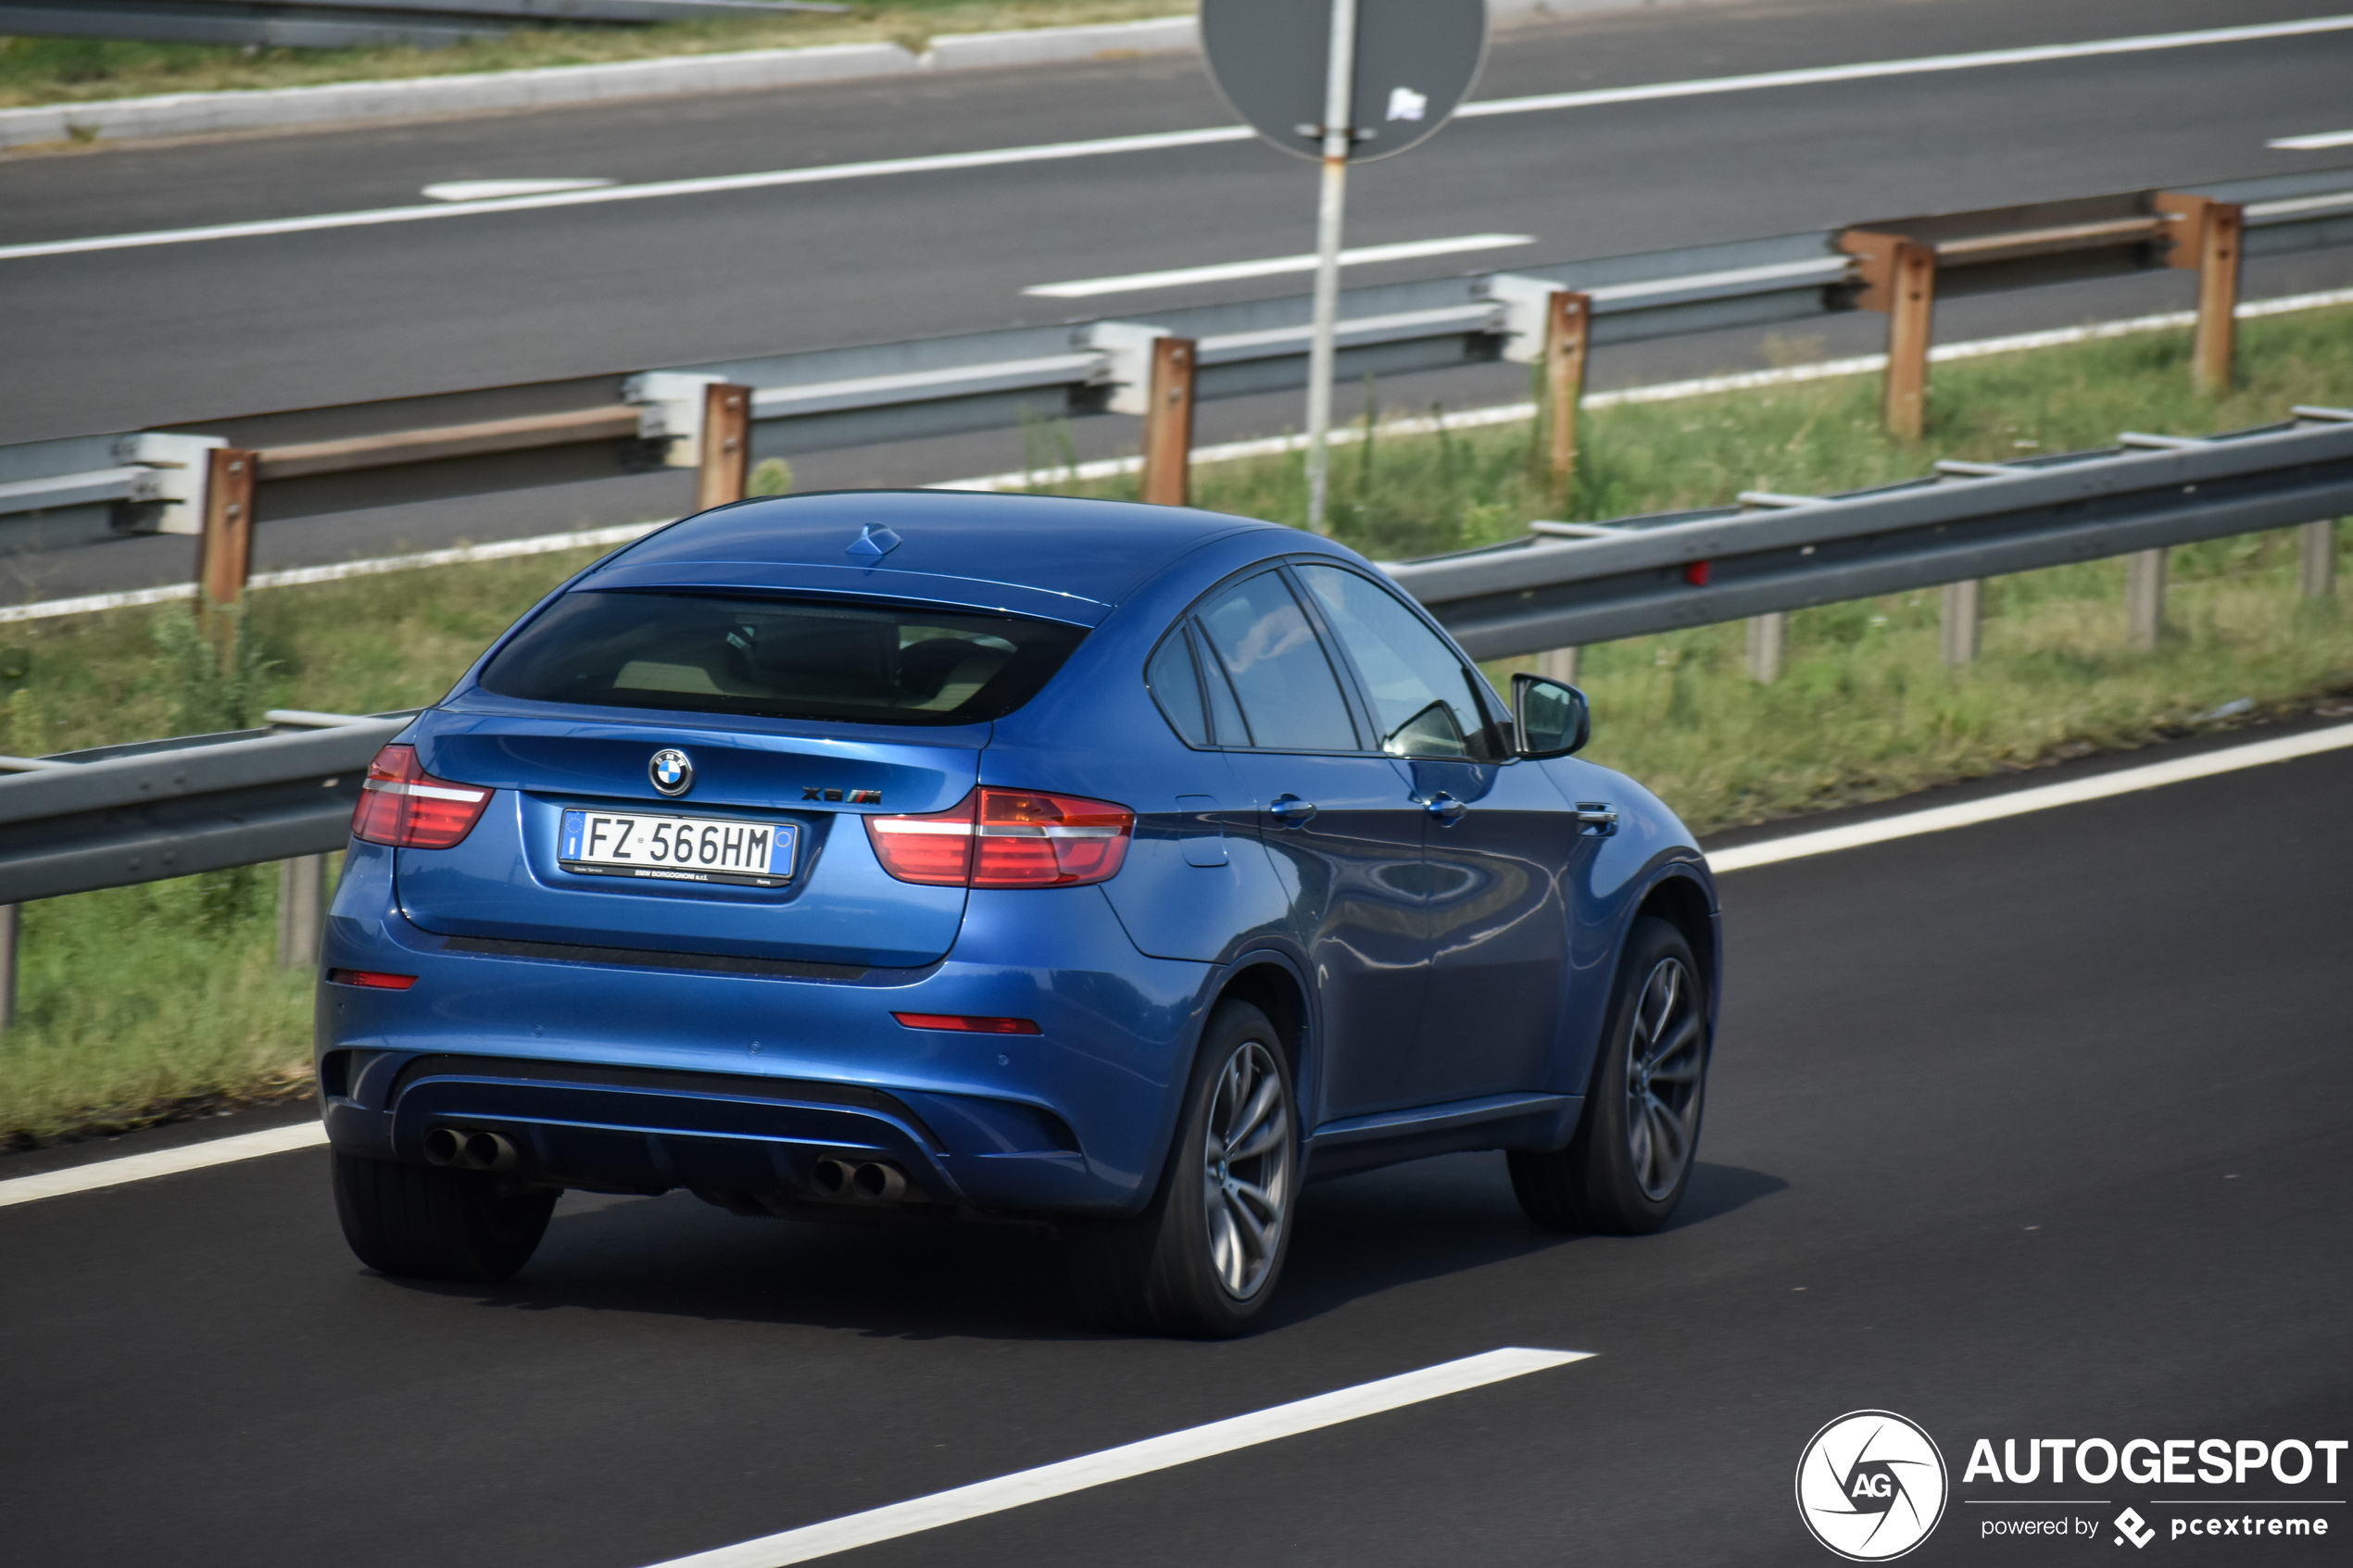 BMW X6 M E71 - 28 January 2022 - Autogespot